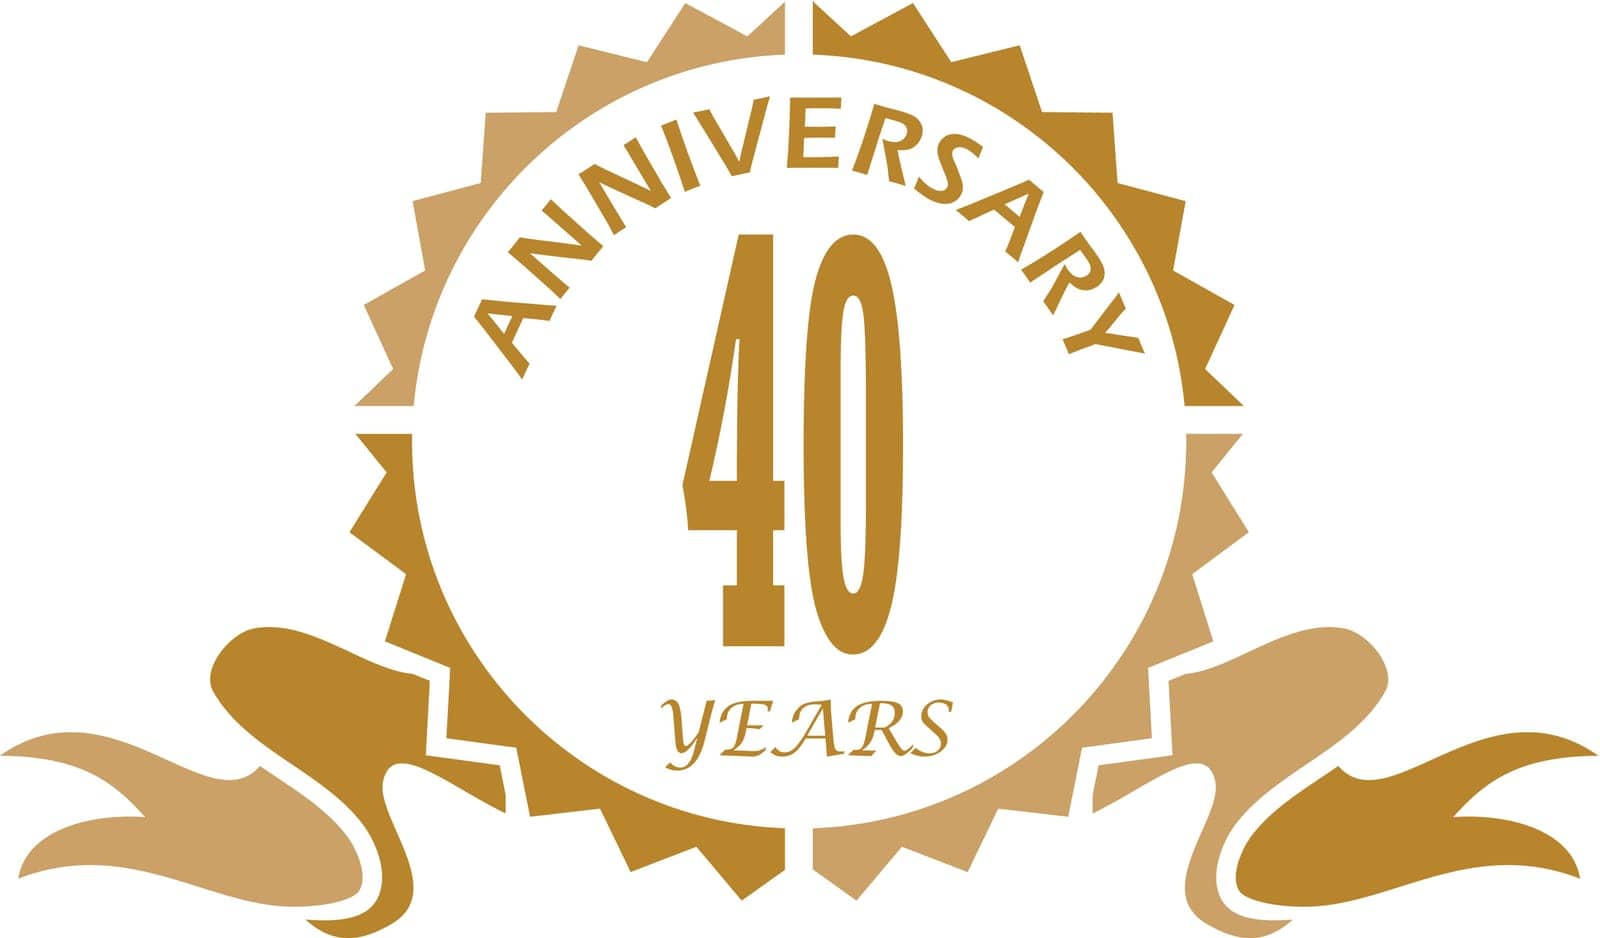 40 Years Ribbon Anniversary by alluranet